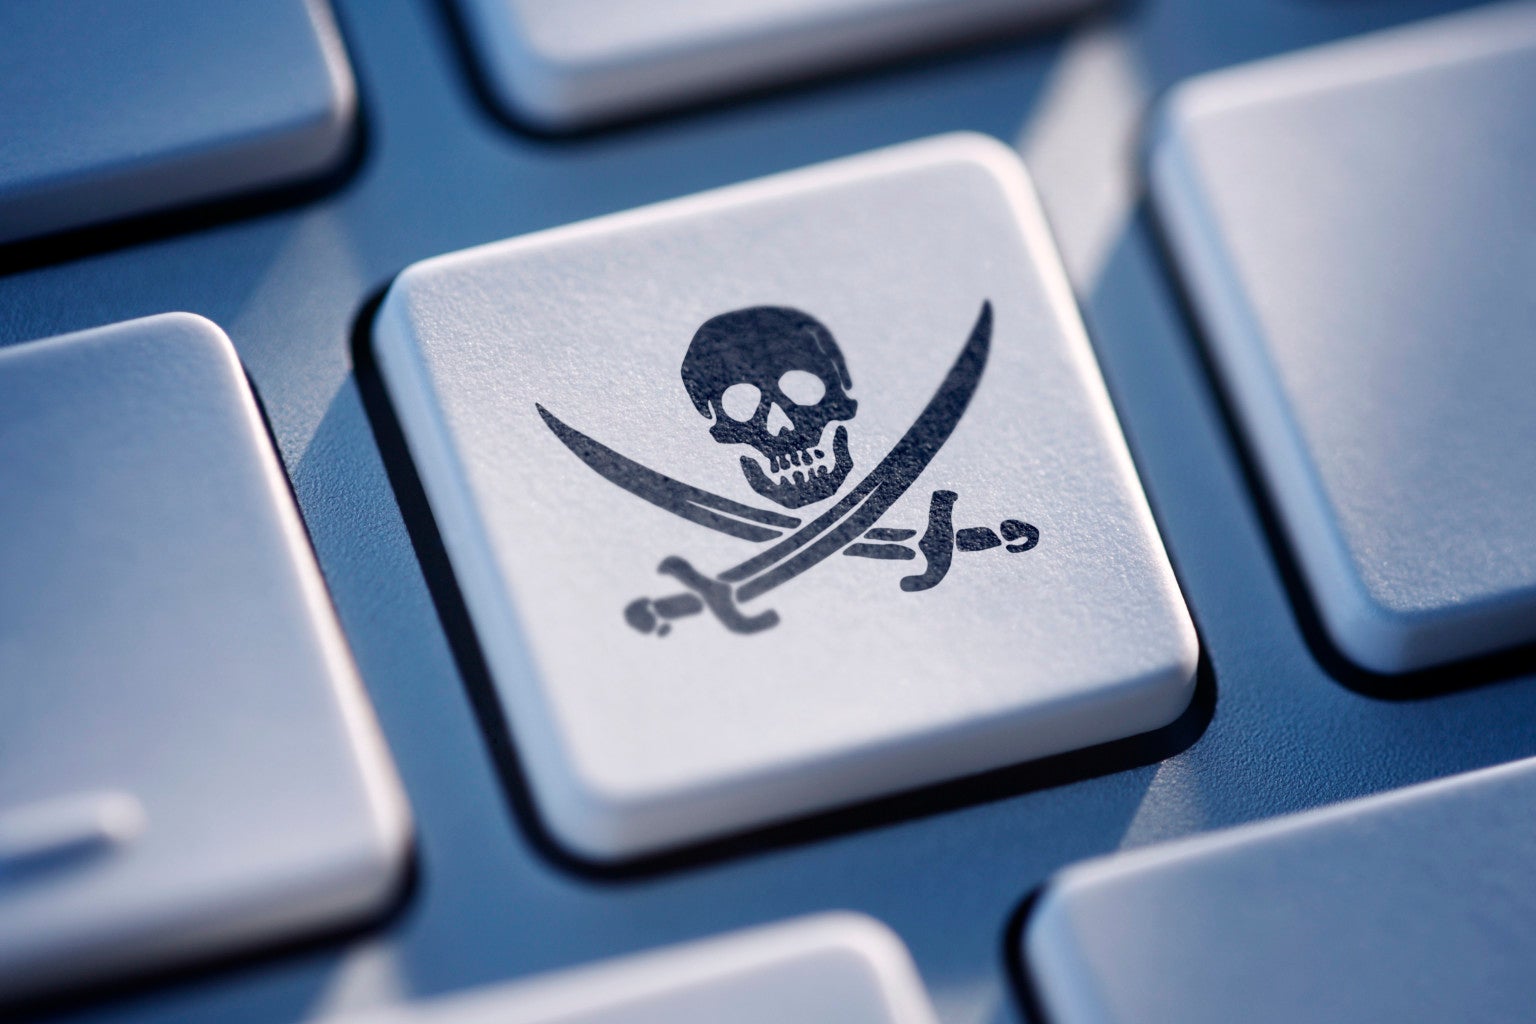 BT, TalkTalk, Sky agree to send piracy warnings for illegal downloads